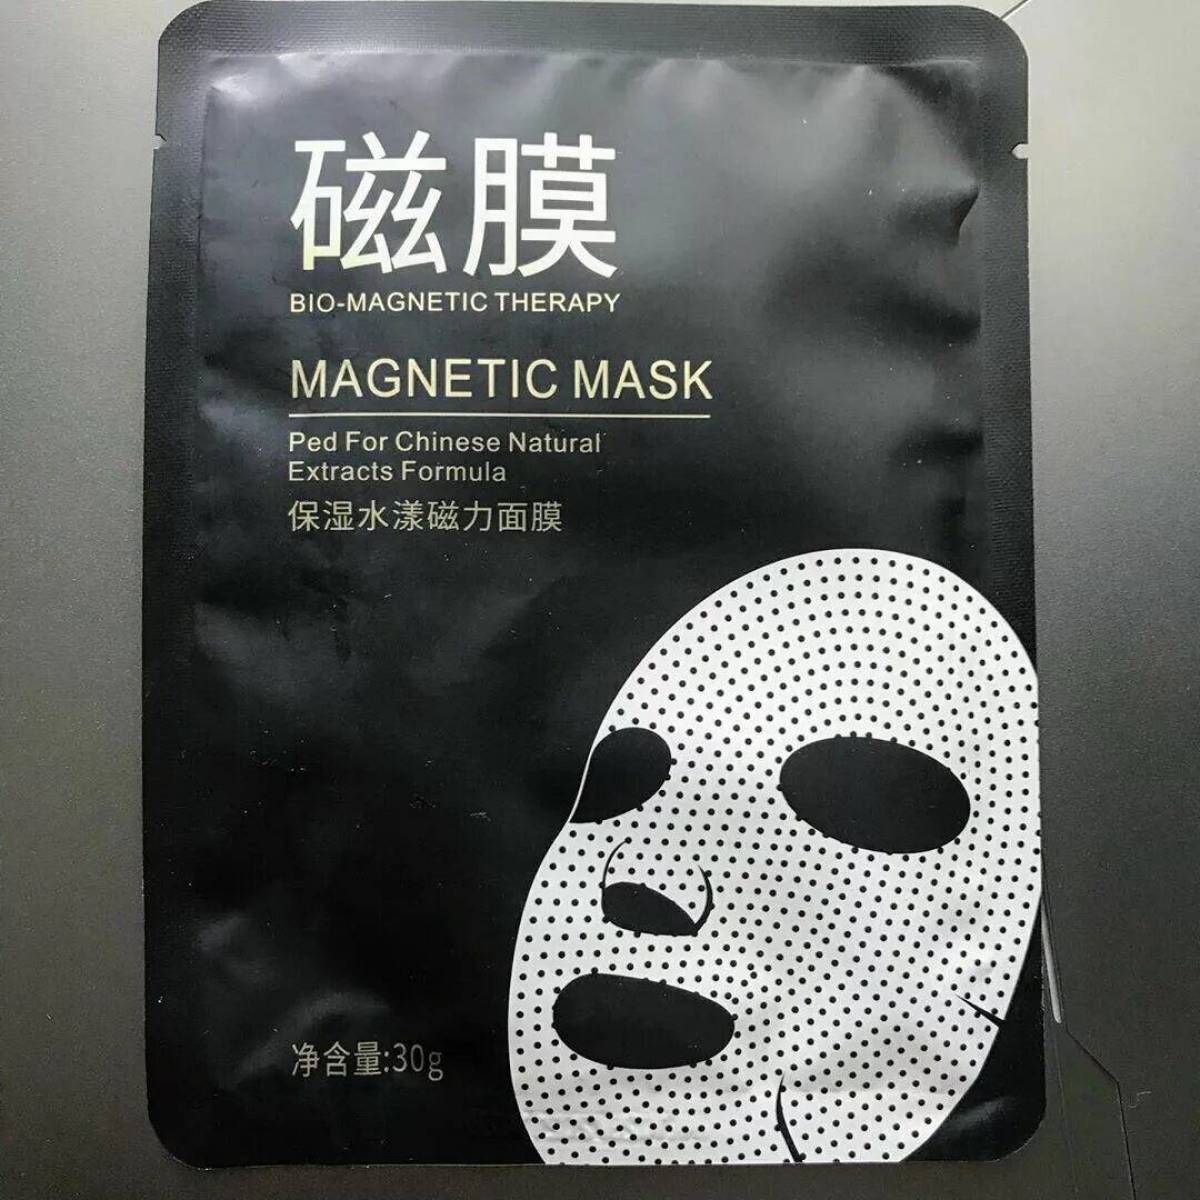 Biodance маска для лица. Акупунктурная магнитная маска для лица "Bio-Magnetic Therapy". Маска для лица. Тканевые маски для лица. Маски для лица тканевые от.